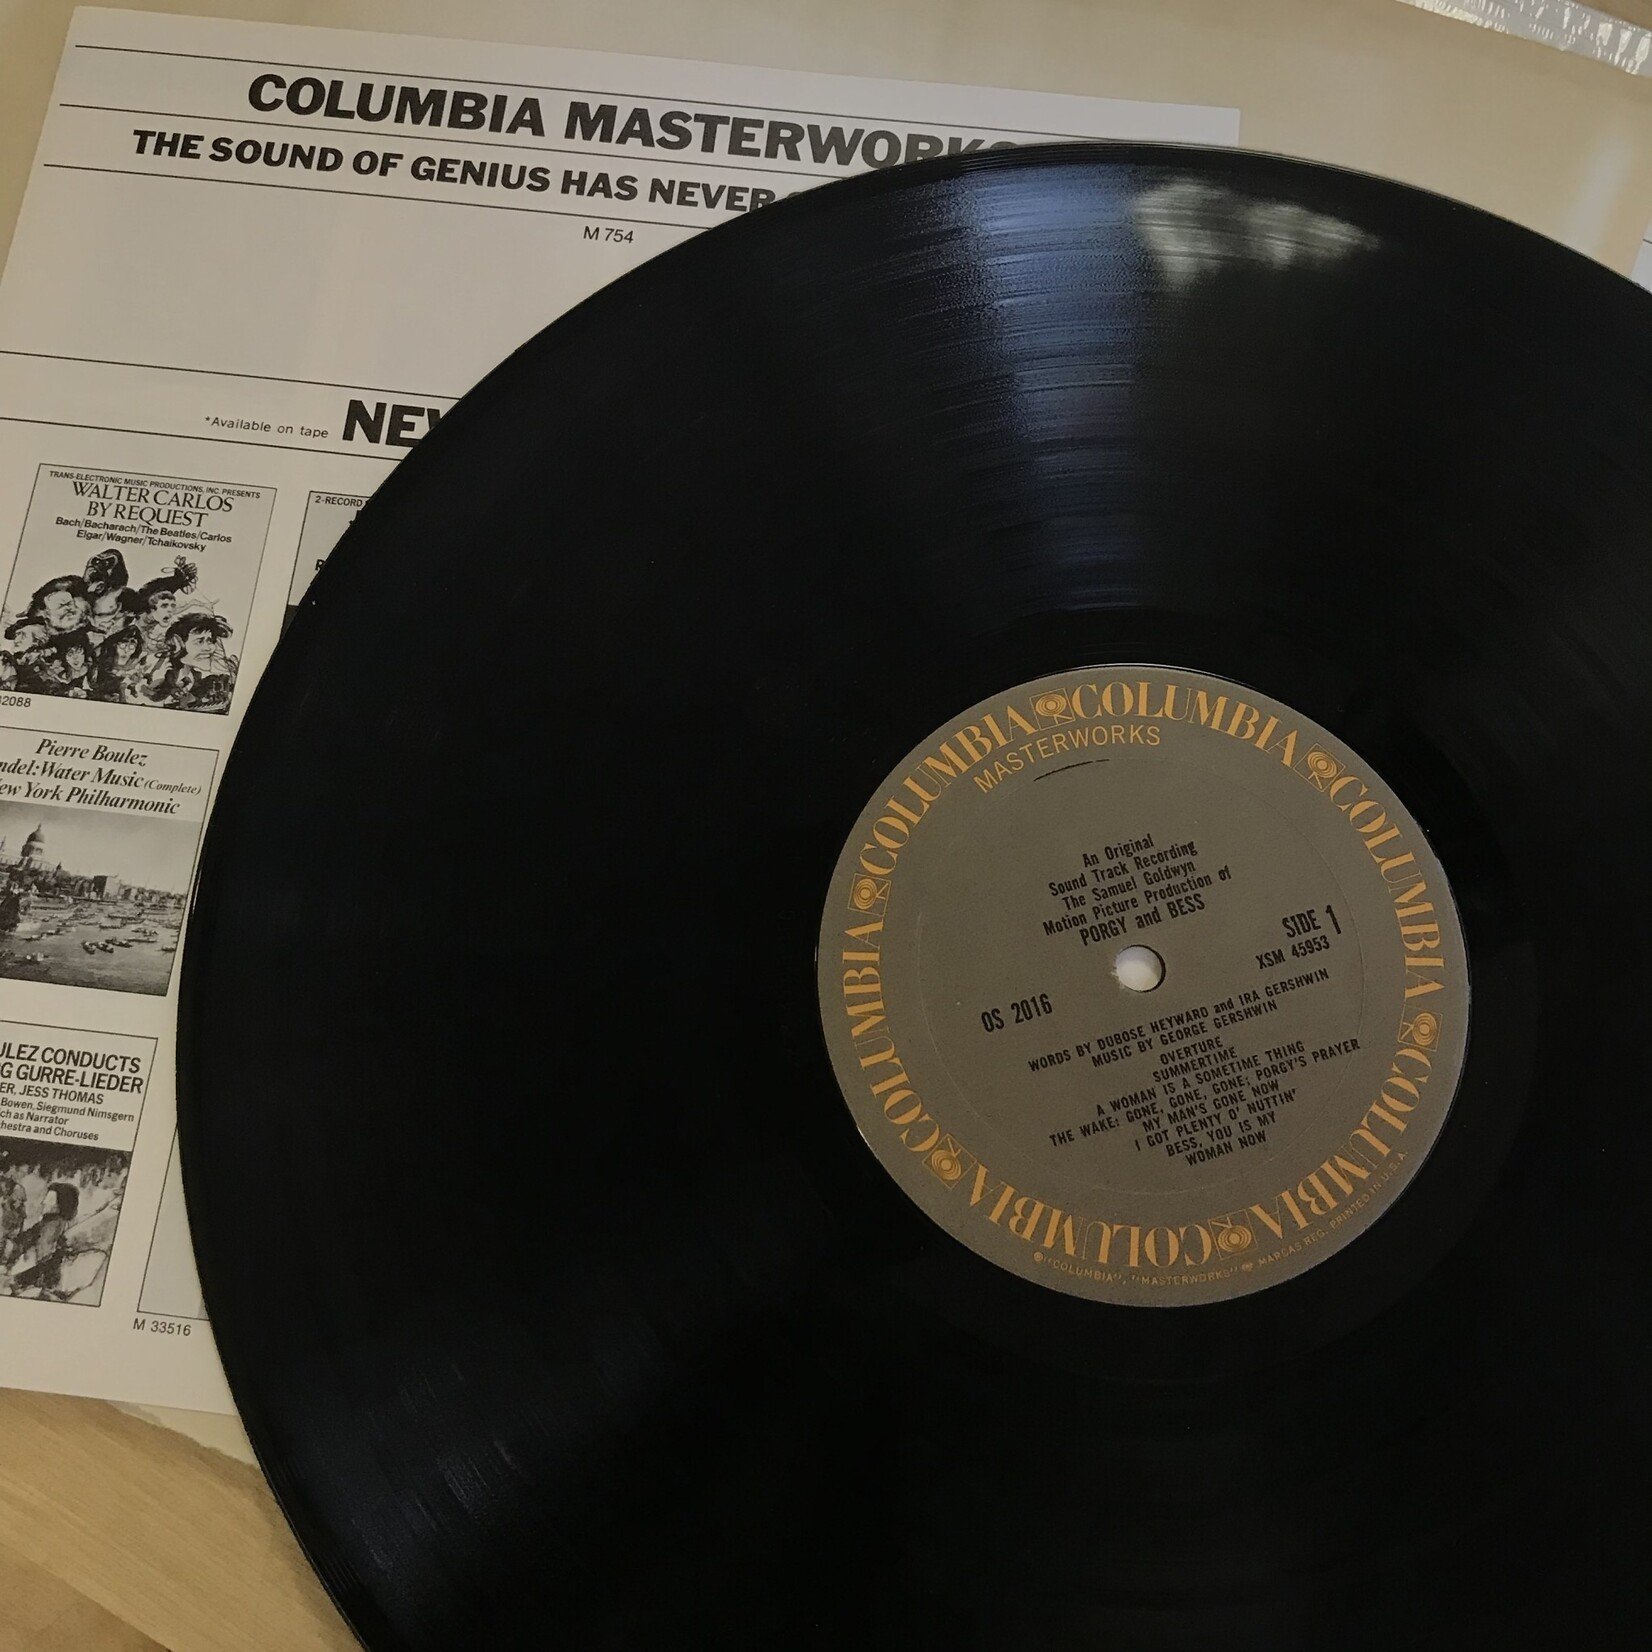 Porgy And Bess - Original Sound Track Recording (CBS Masterworks) - XSM45953 - Vinyl LP (USED)